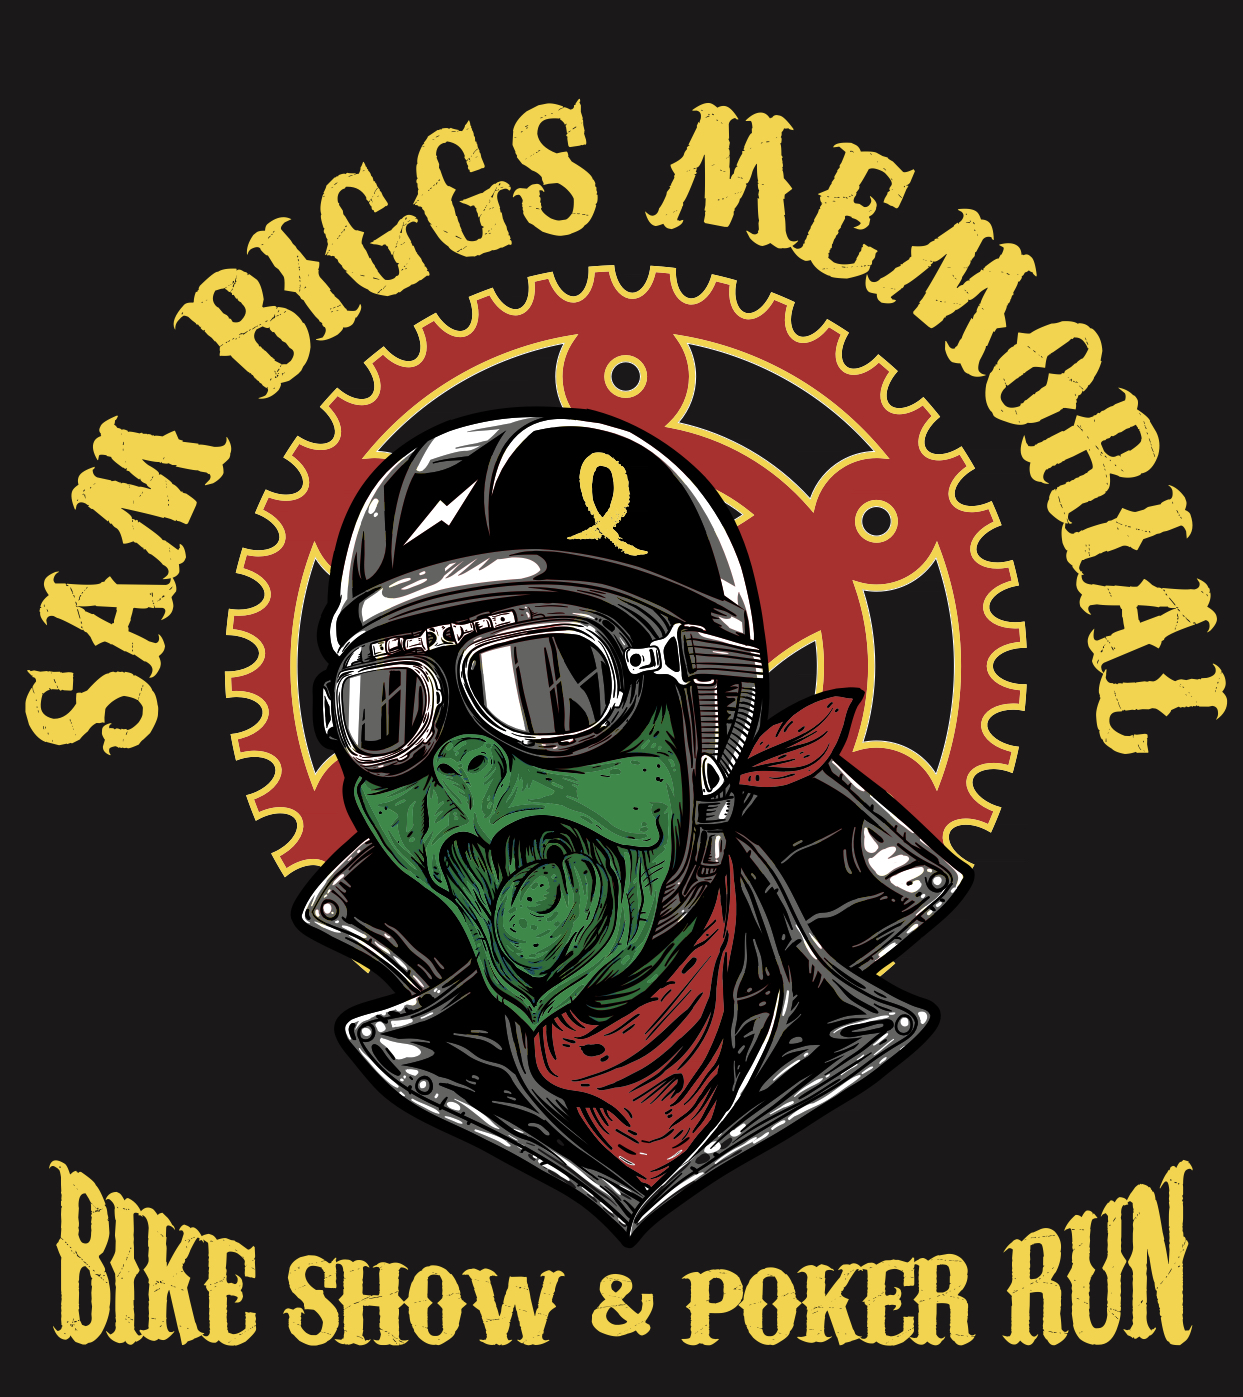 SAM Biggs Show & Run in Missouri